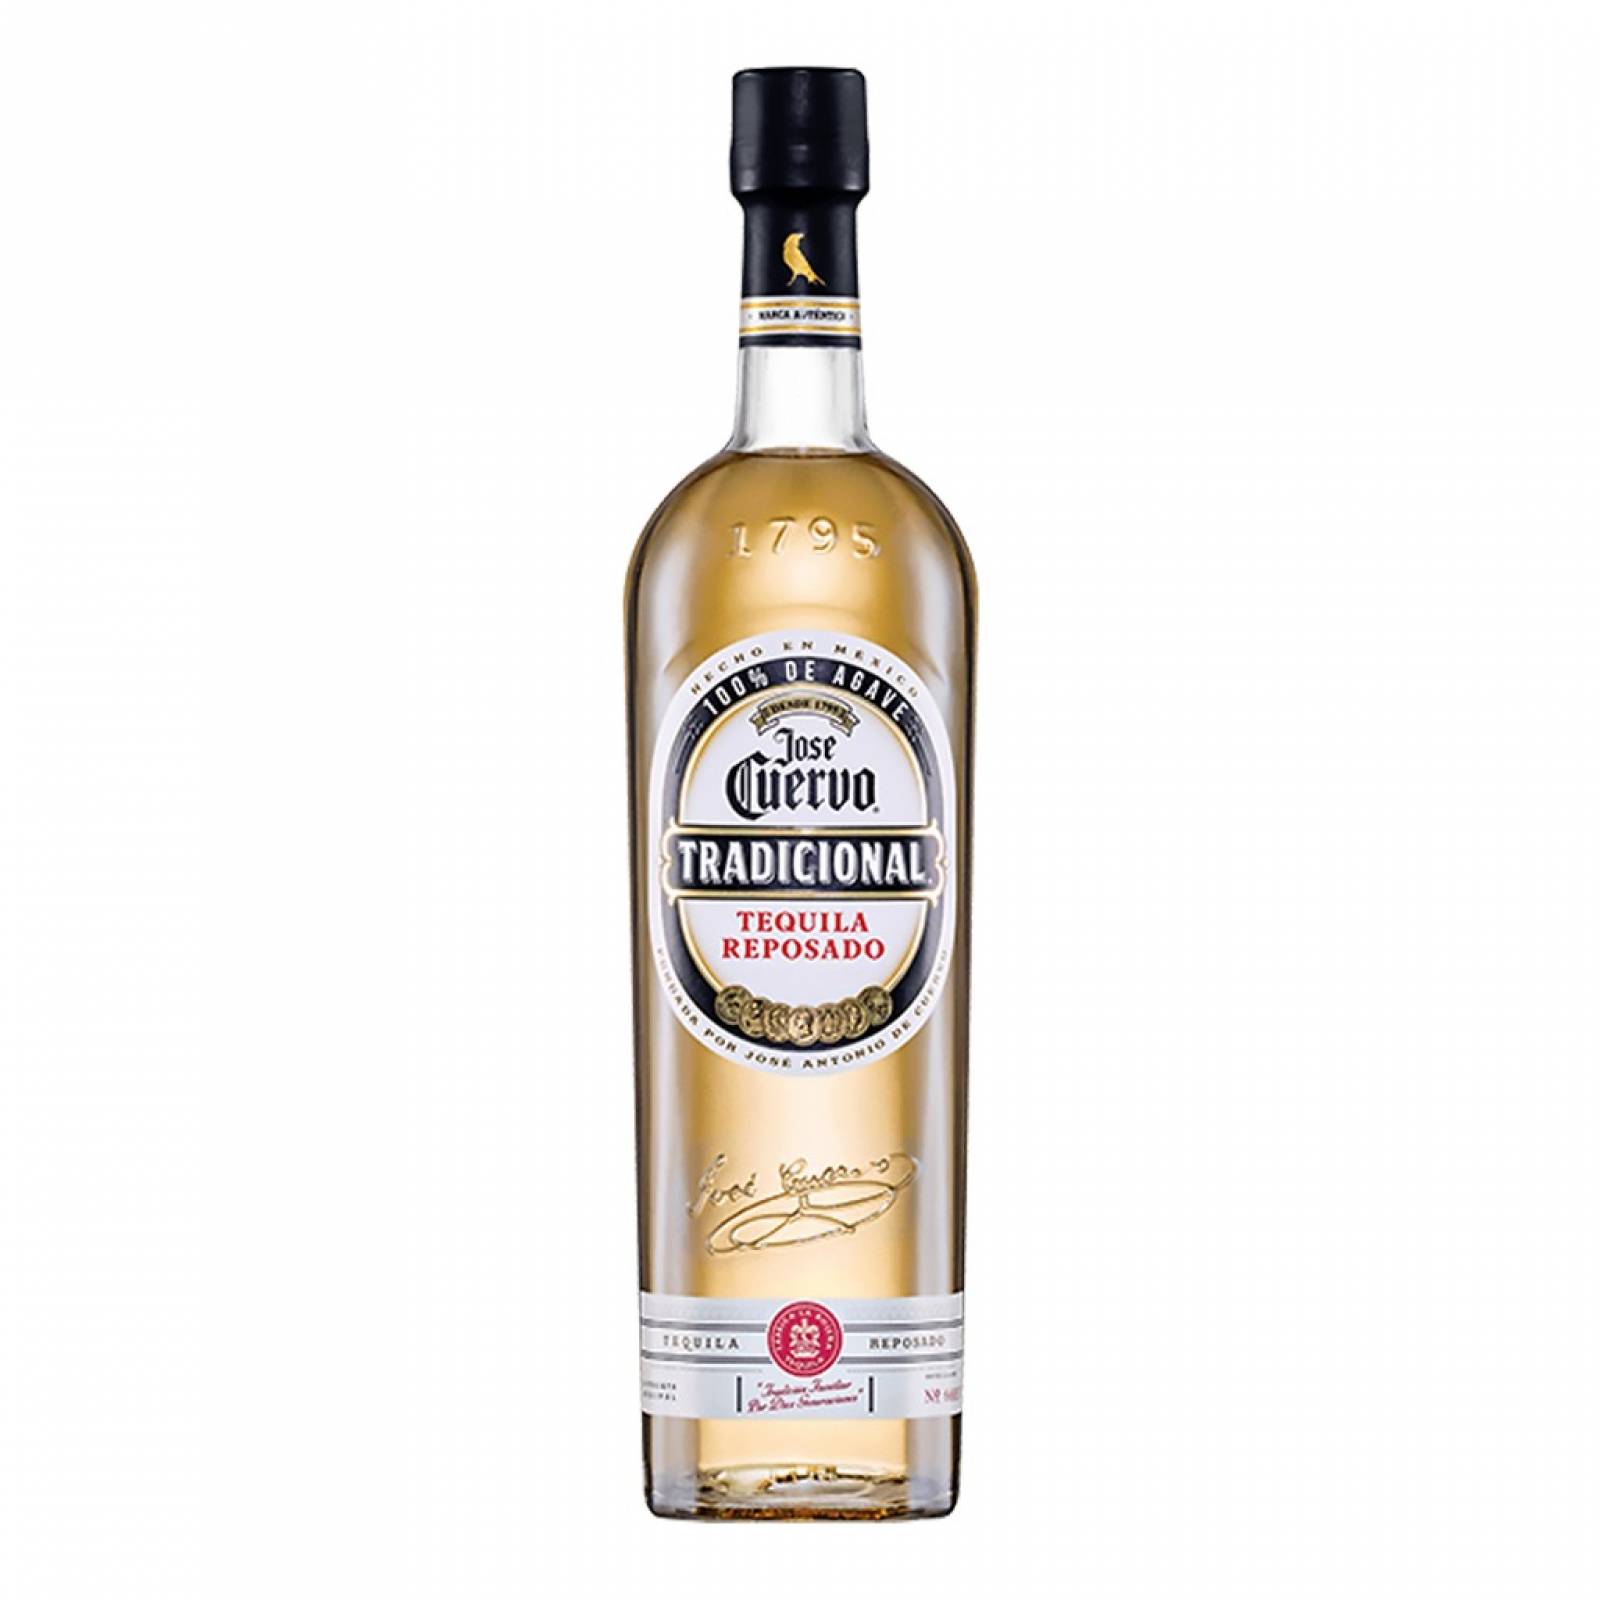 Jose Cuervo Tequila Tradicional 695 ml